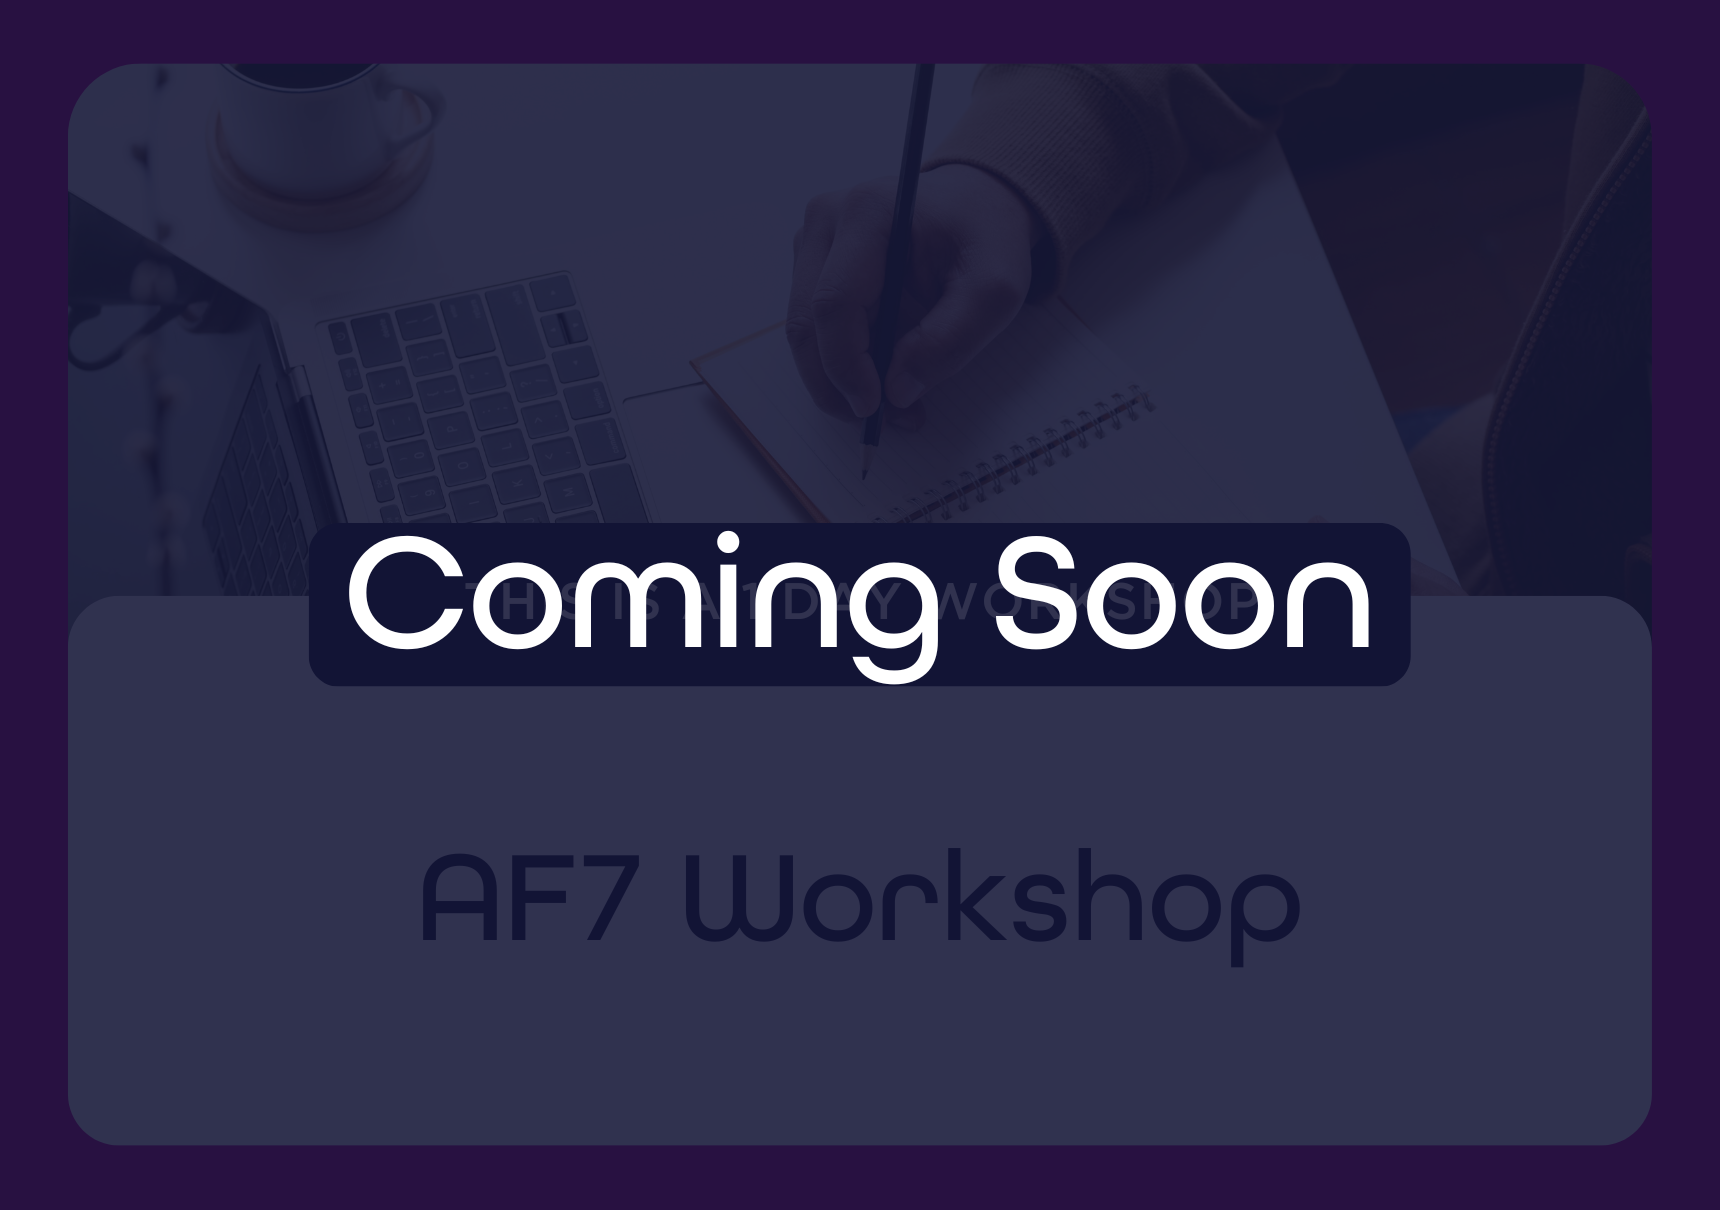 AF7 Workshop - Coming Soon